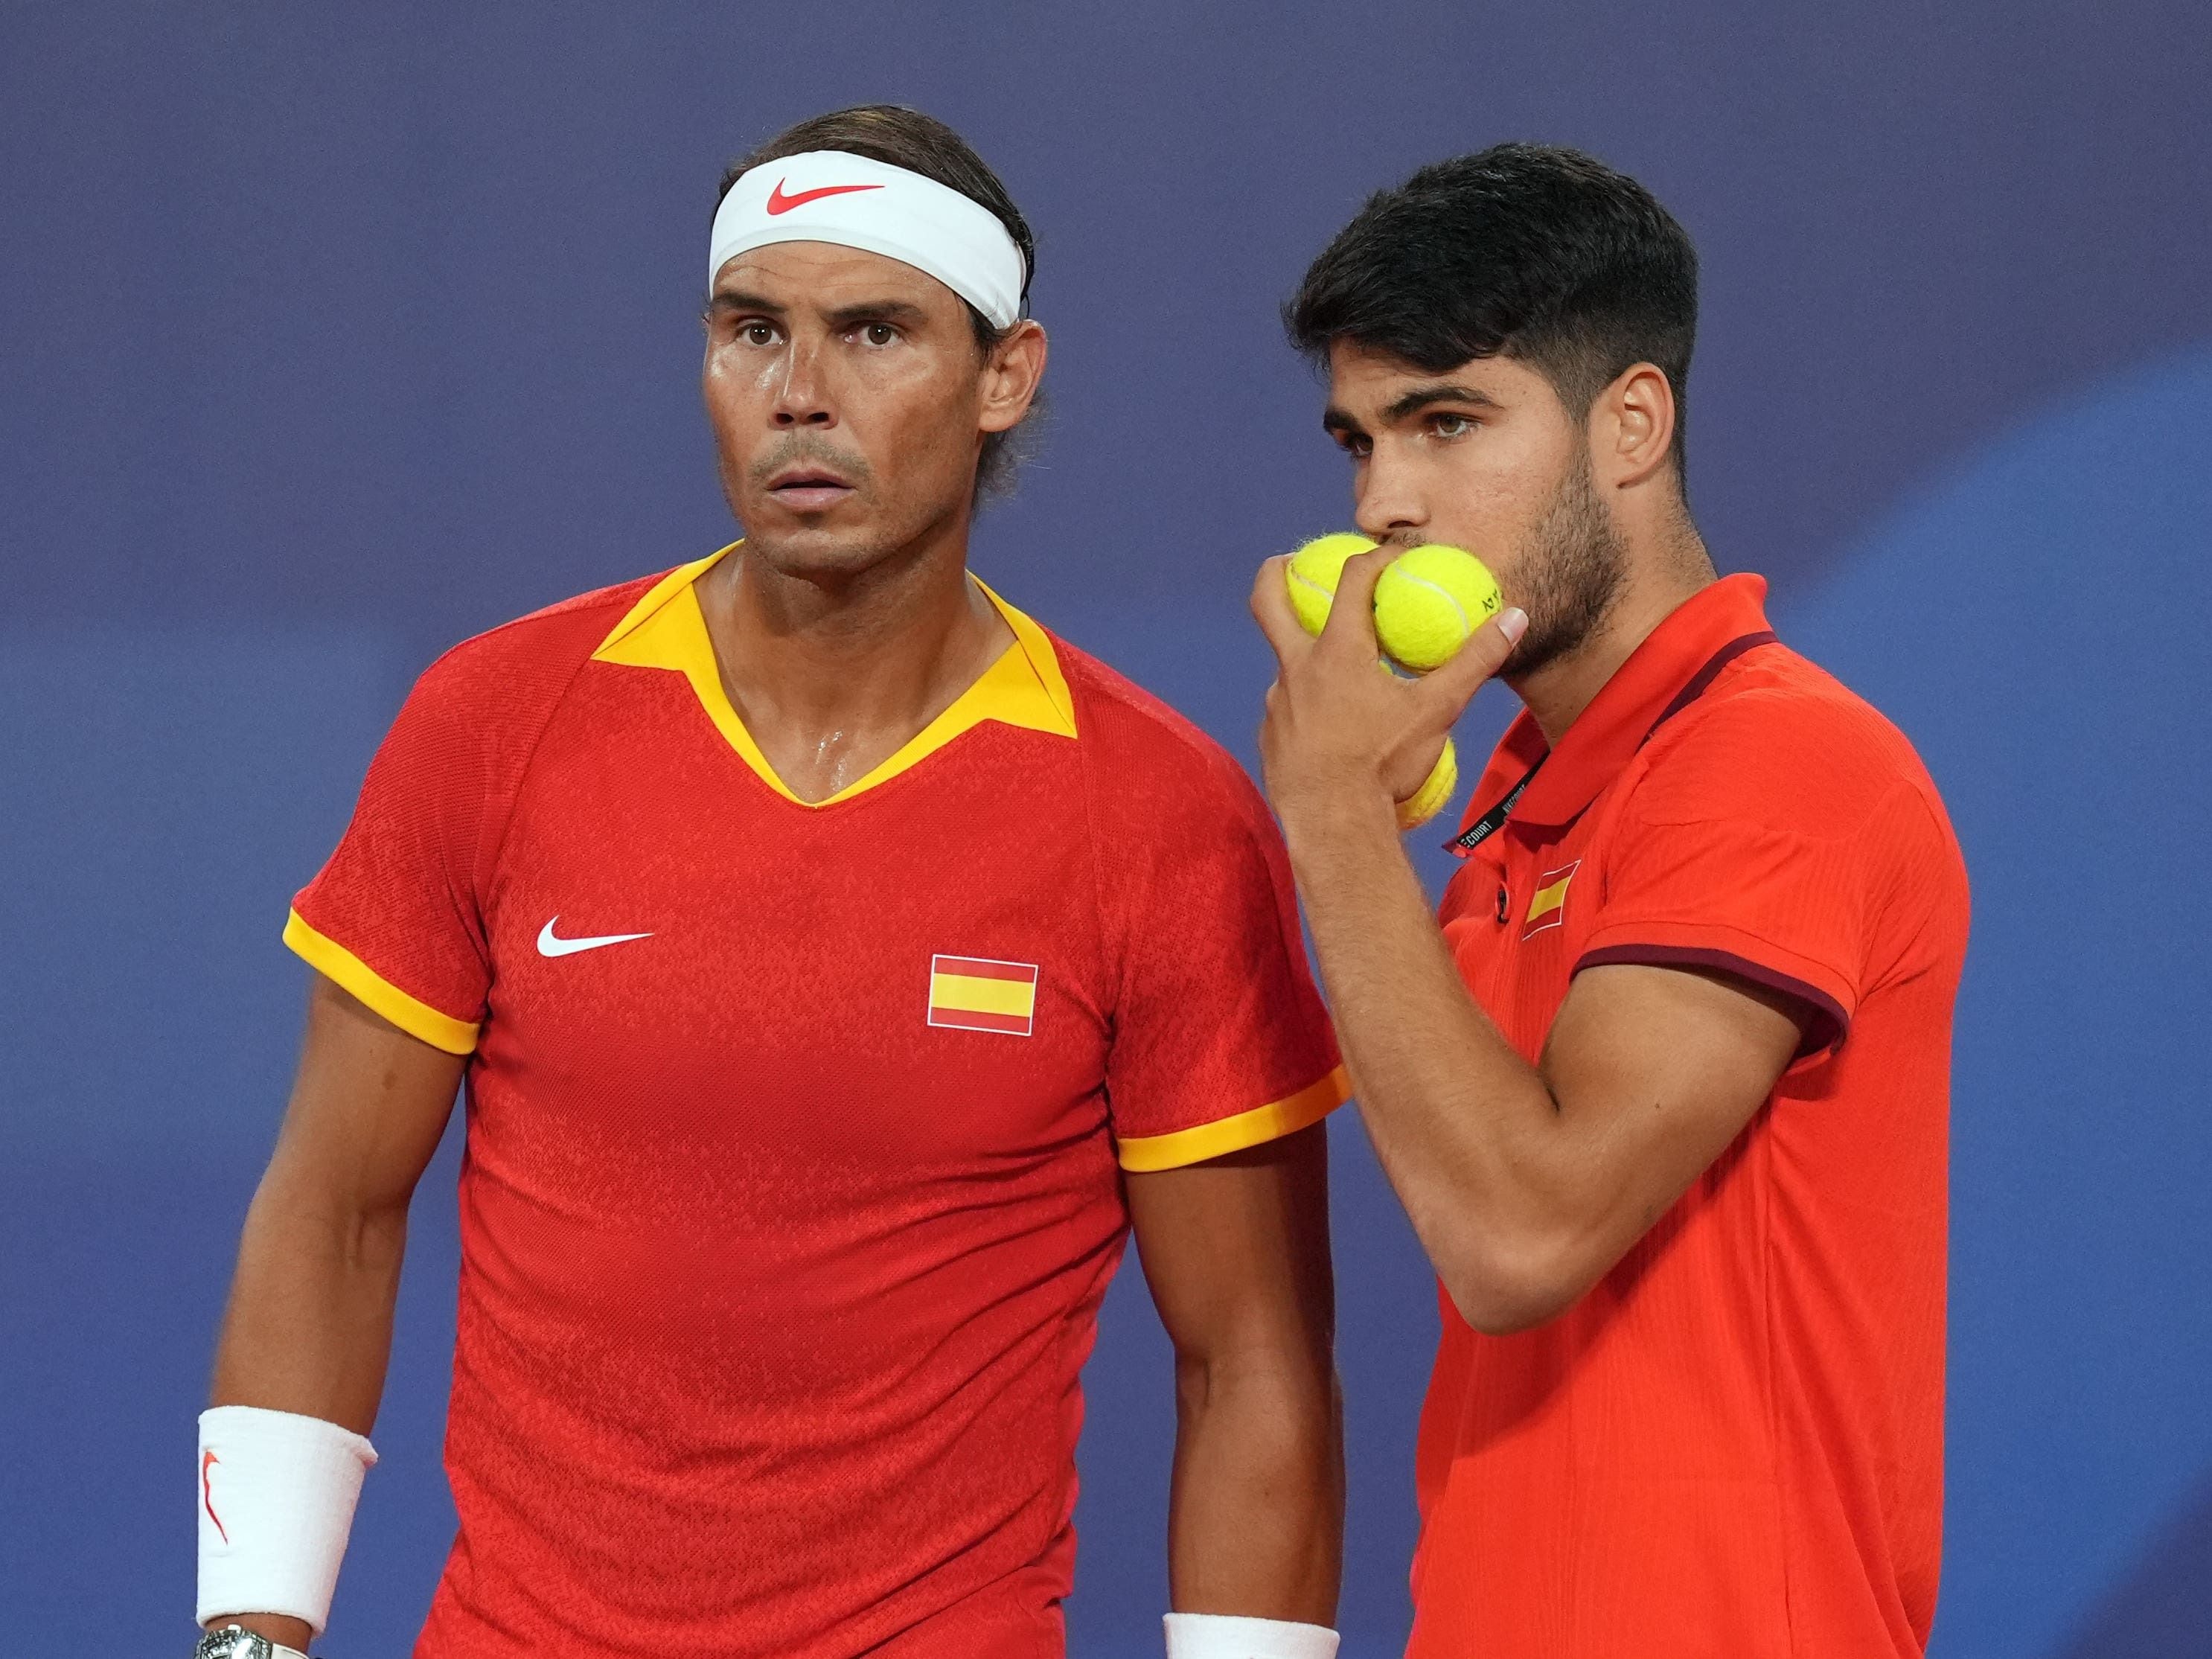 Rafael Nadal and Carlos Alacaraz launch Olympics doubles bid in style